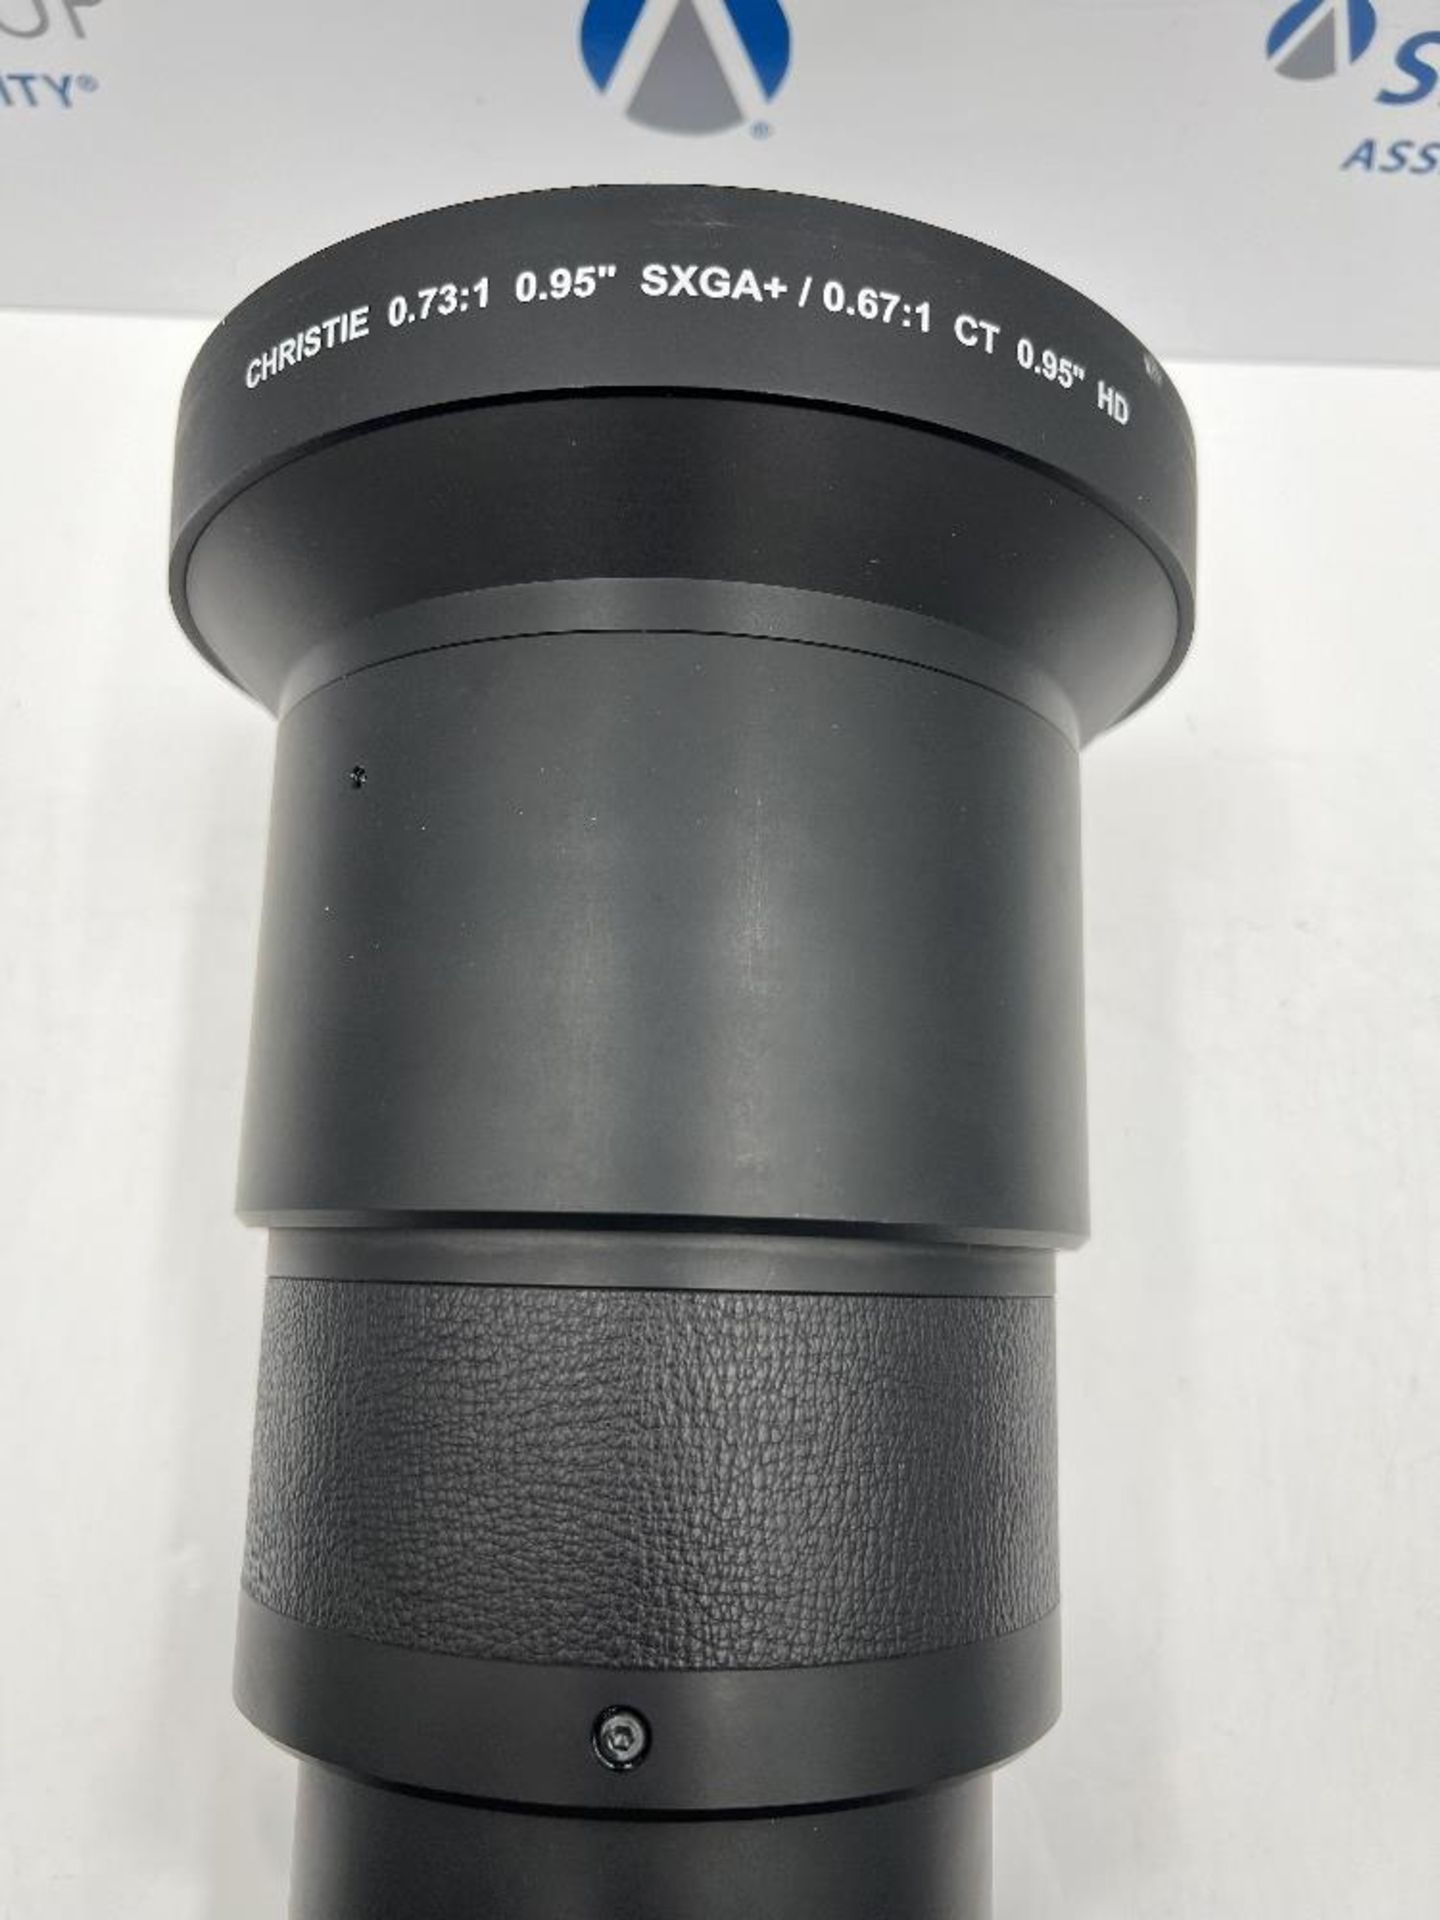 Christie DP Lens 0.67 With Peli Case - Image 5 of 8